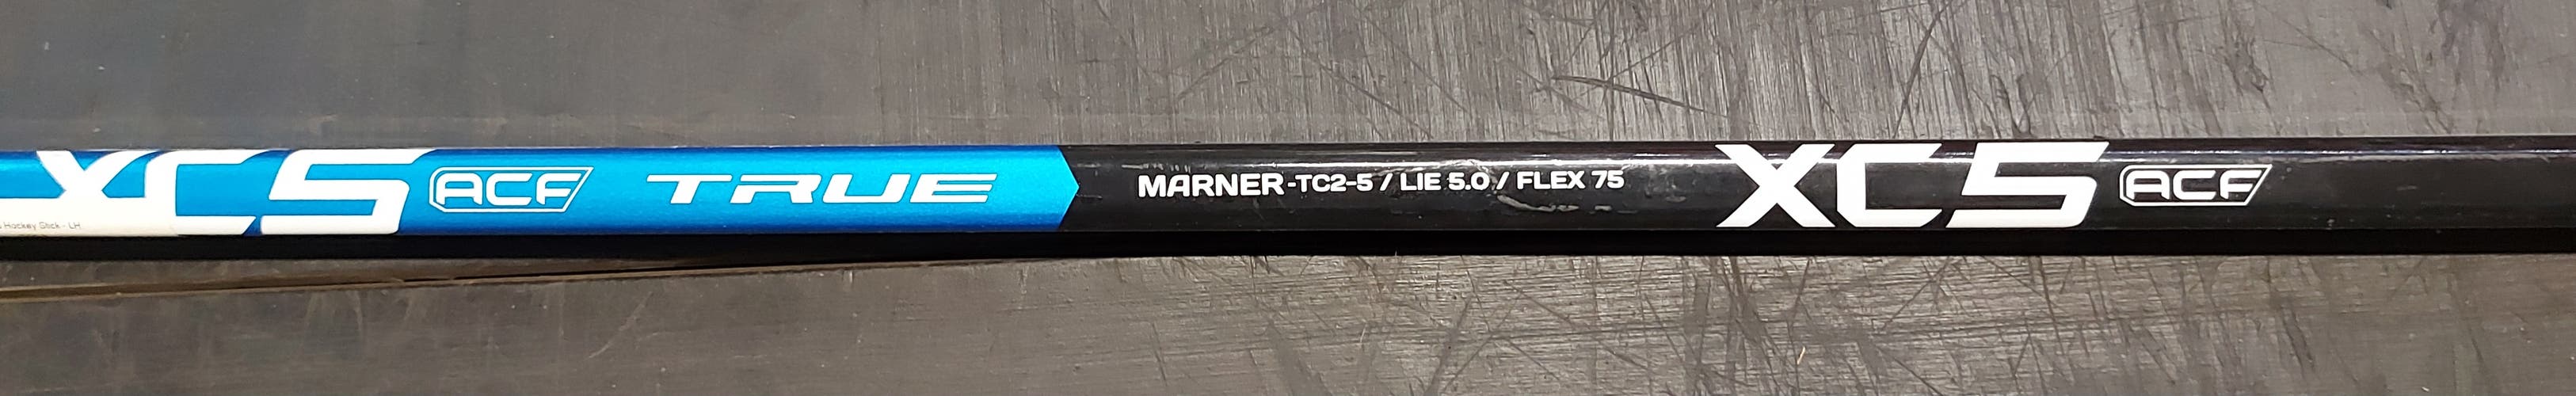 New TRUE XC5 Senior Left Hand Hockey Stick  MARNER - TC2-5/LIE 5.0/FLEX 75 (7488)